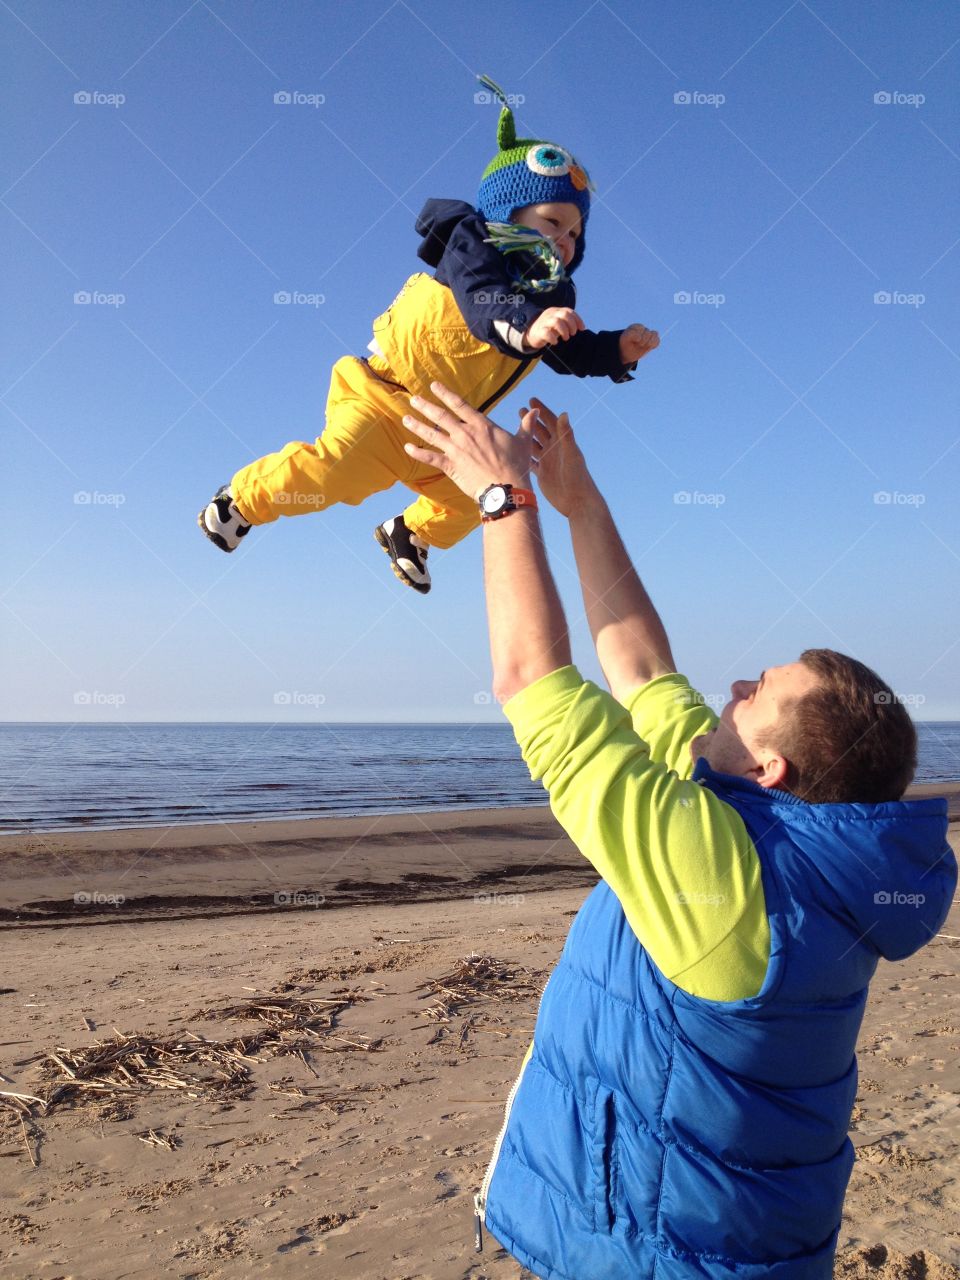 Man throwing his son in the air at beach